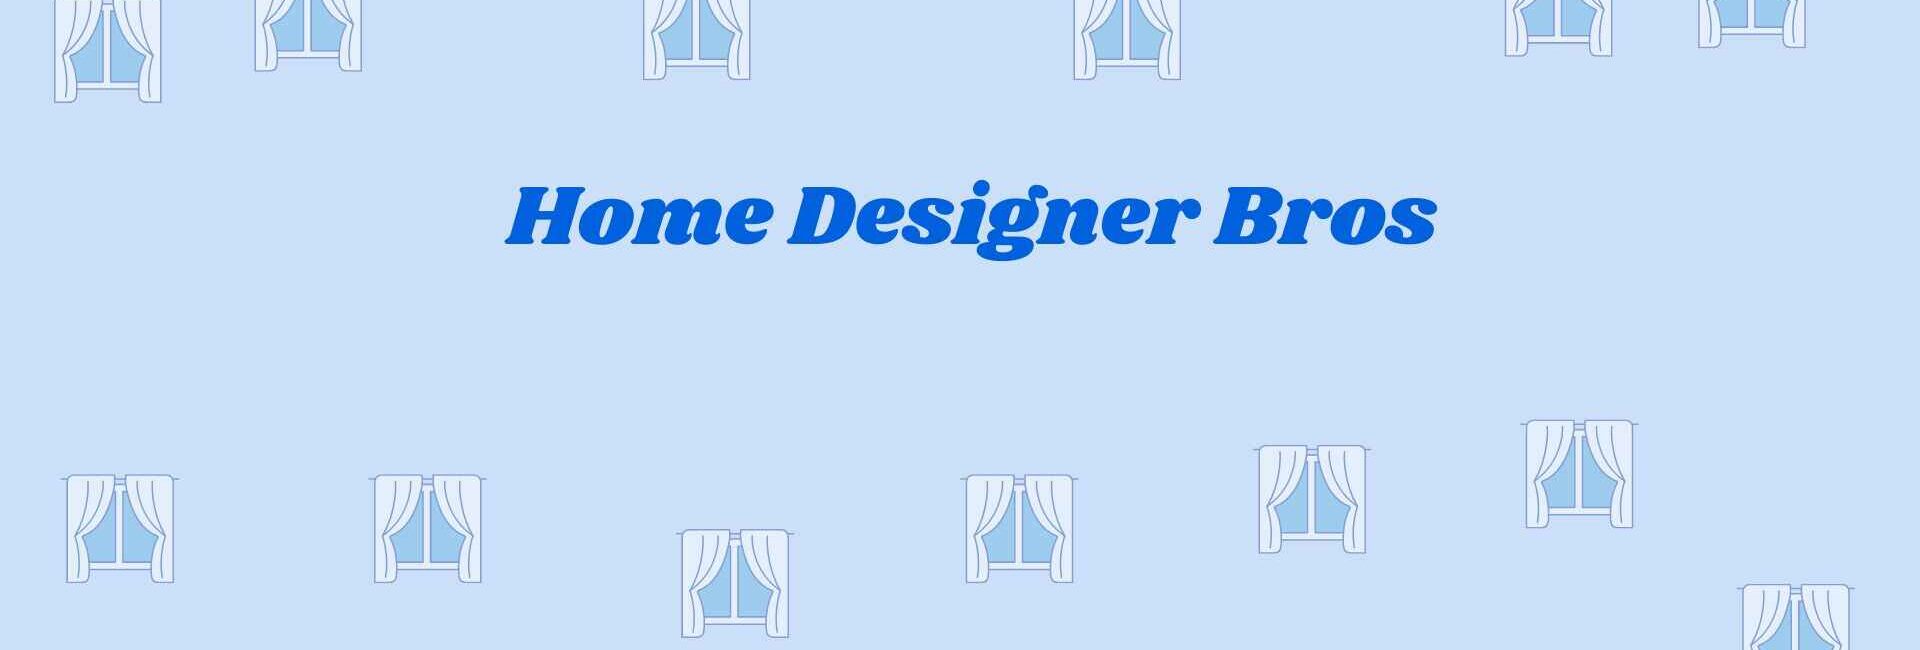 Home Designer Bros - home interior dealers in Noida